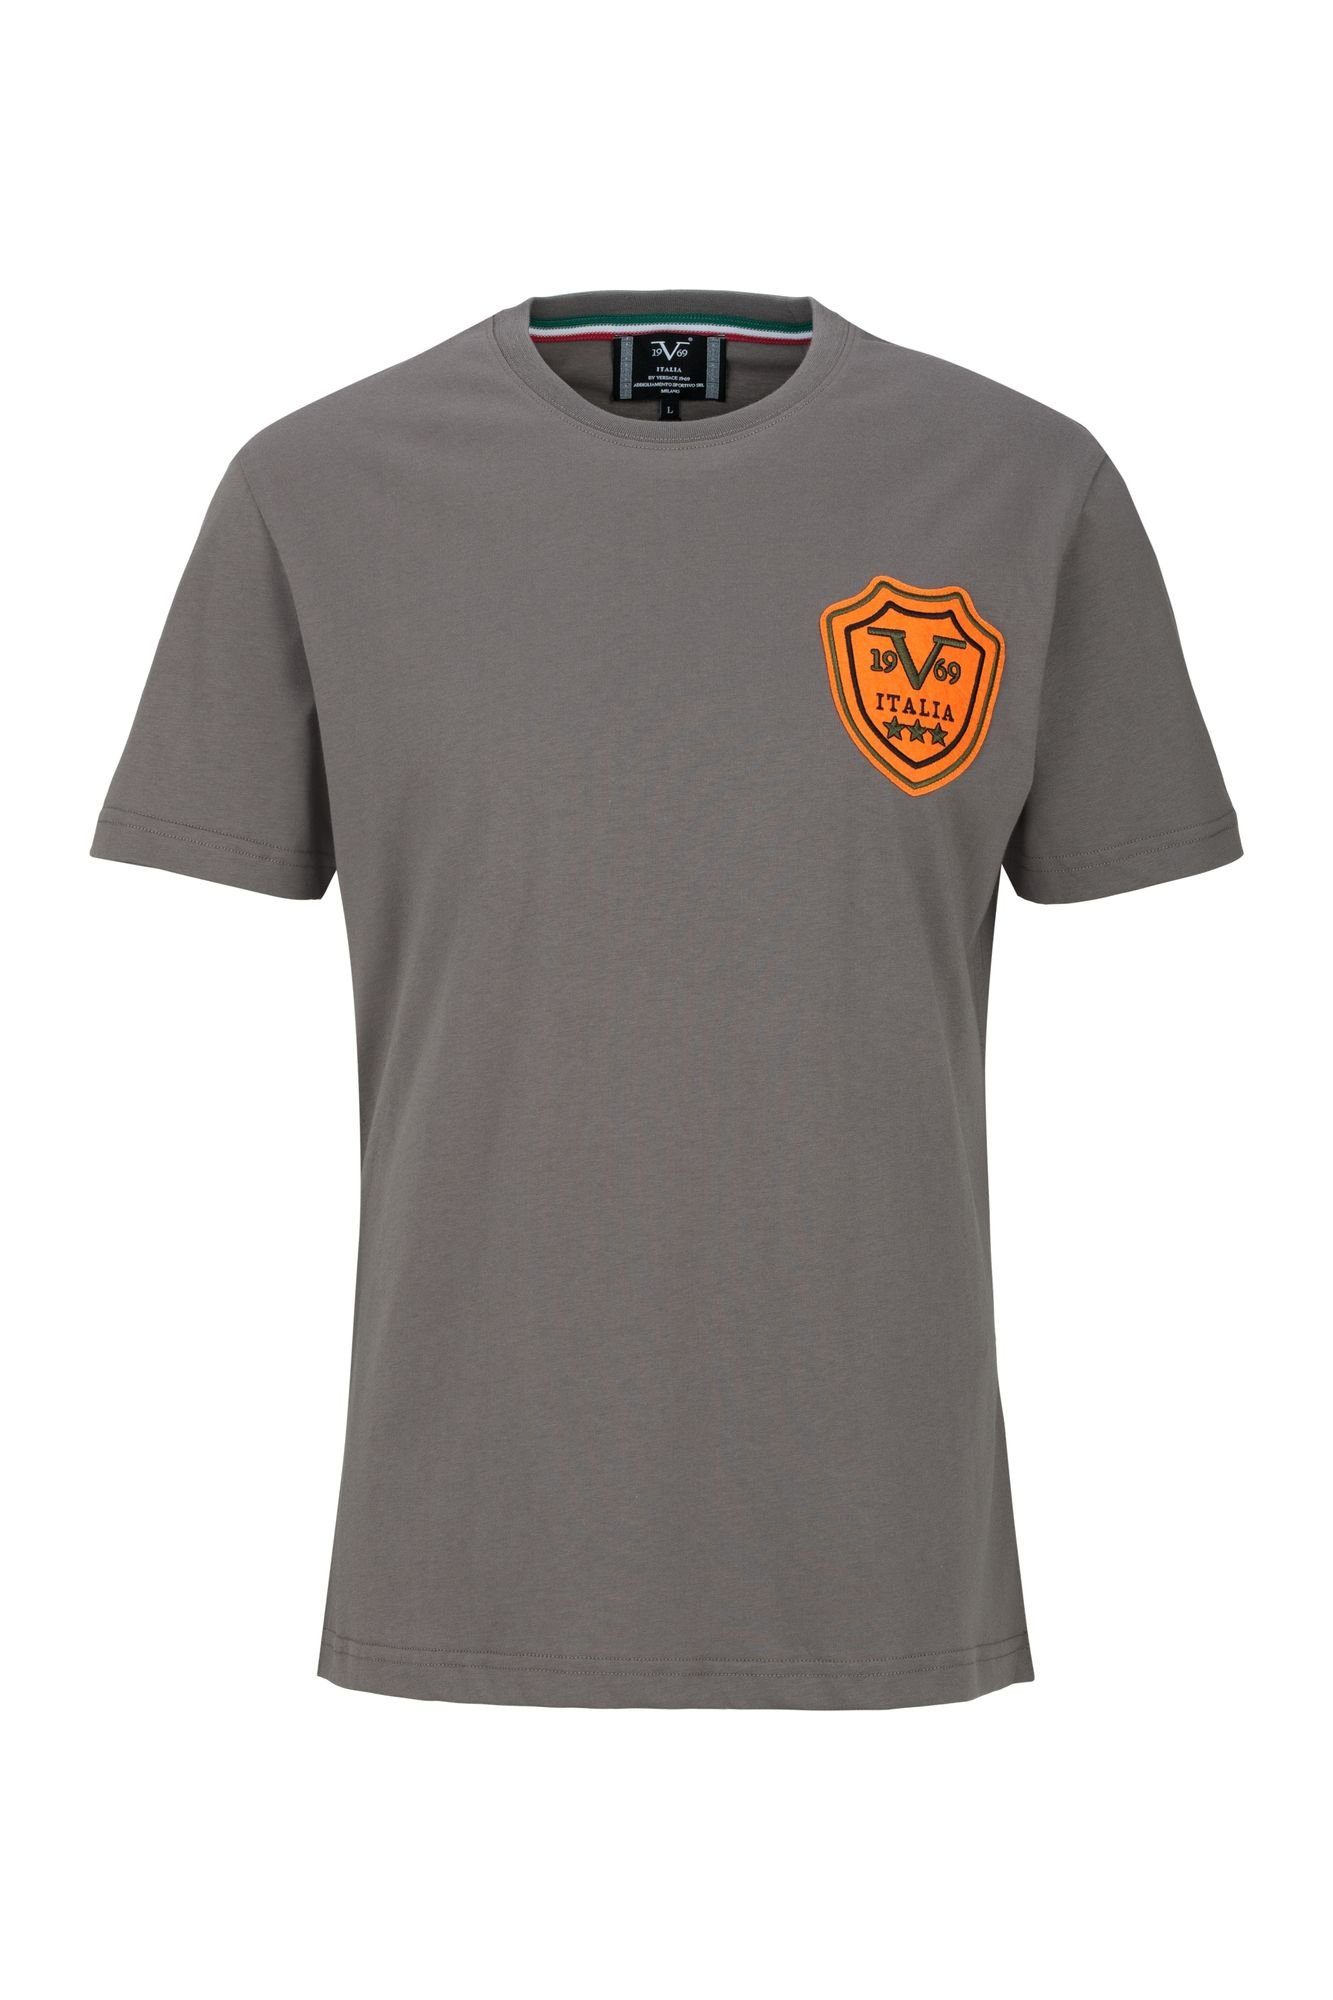 19V69 Italia by Versace T-Shirt by Versace Sportivo SRL - Leandro | T-Shirts